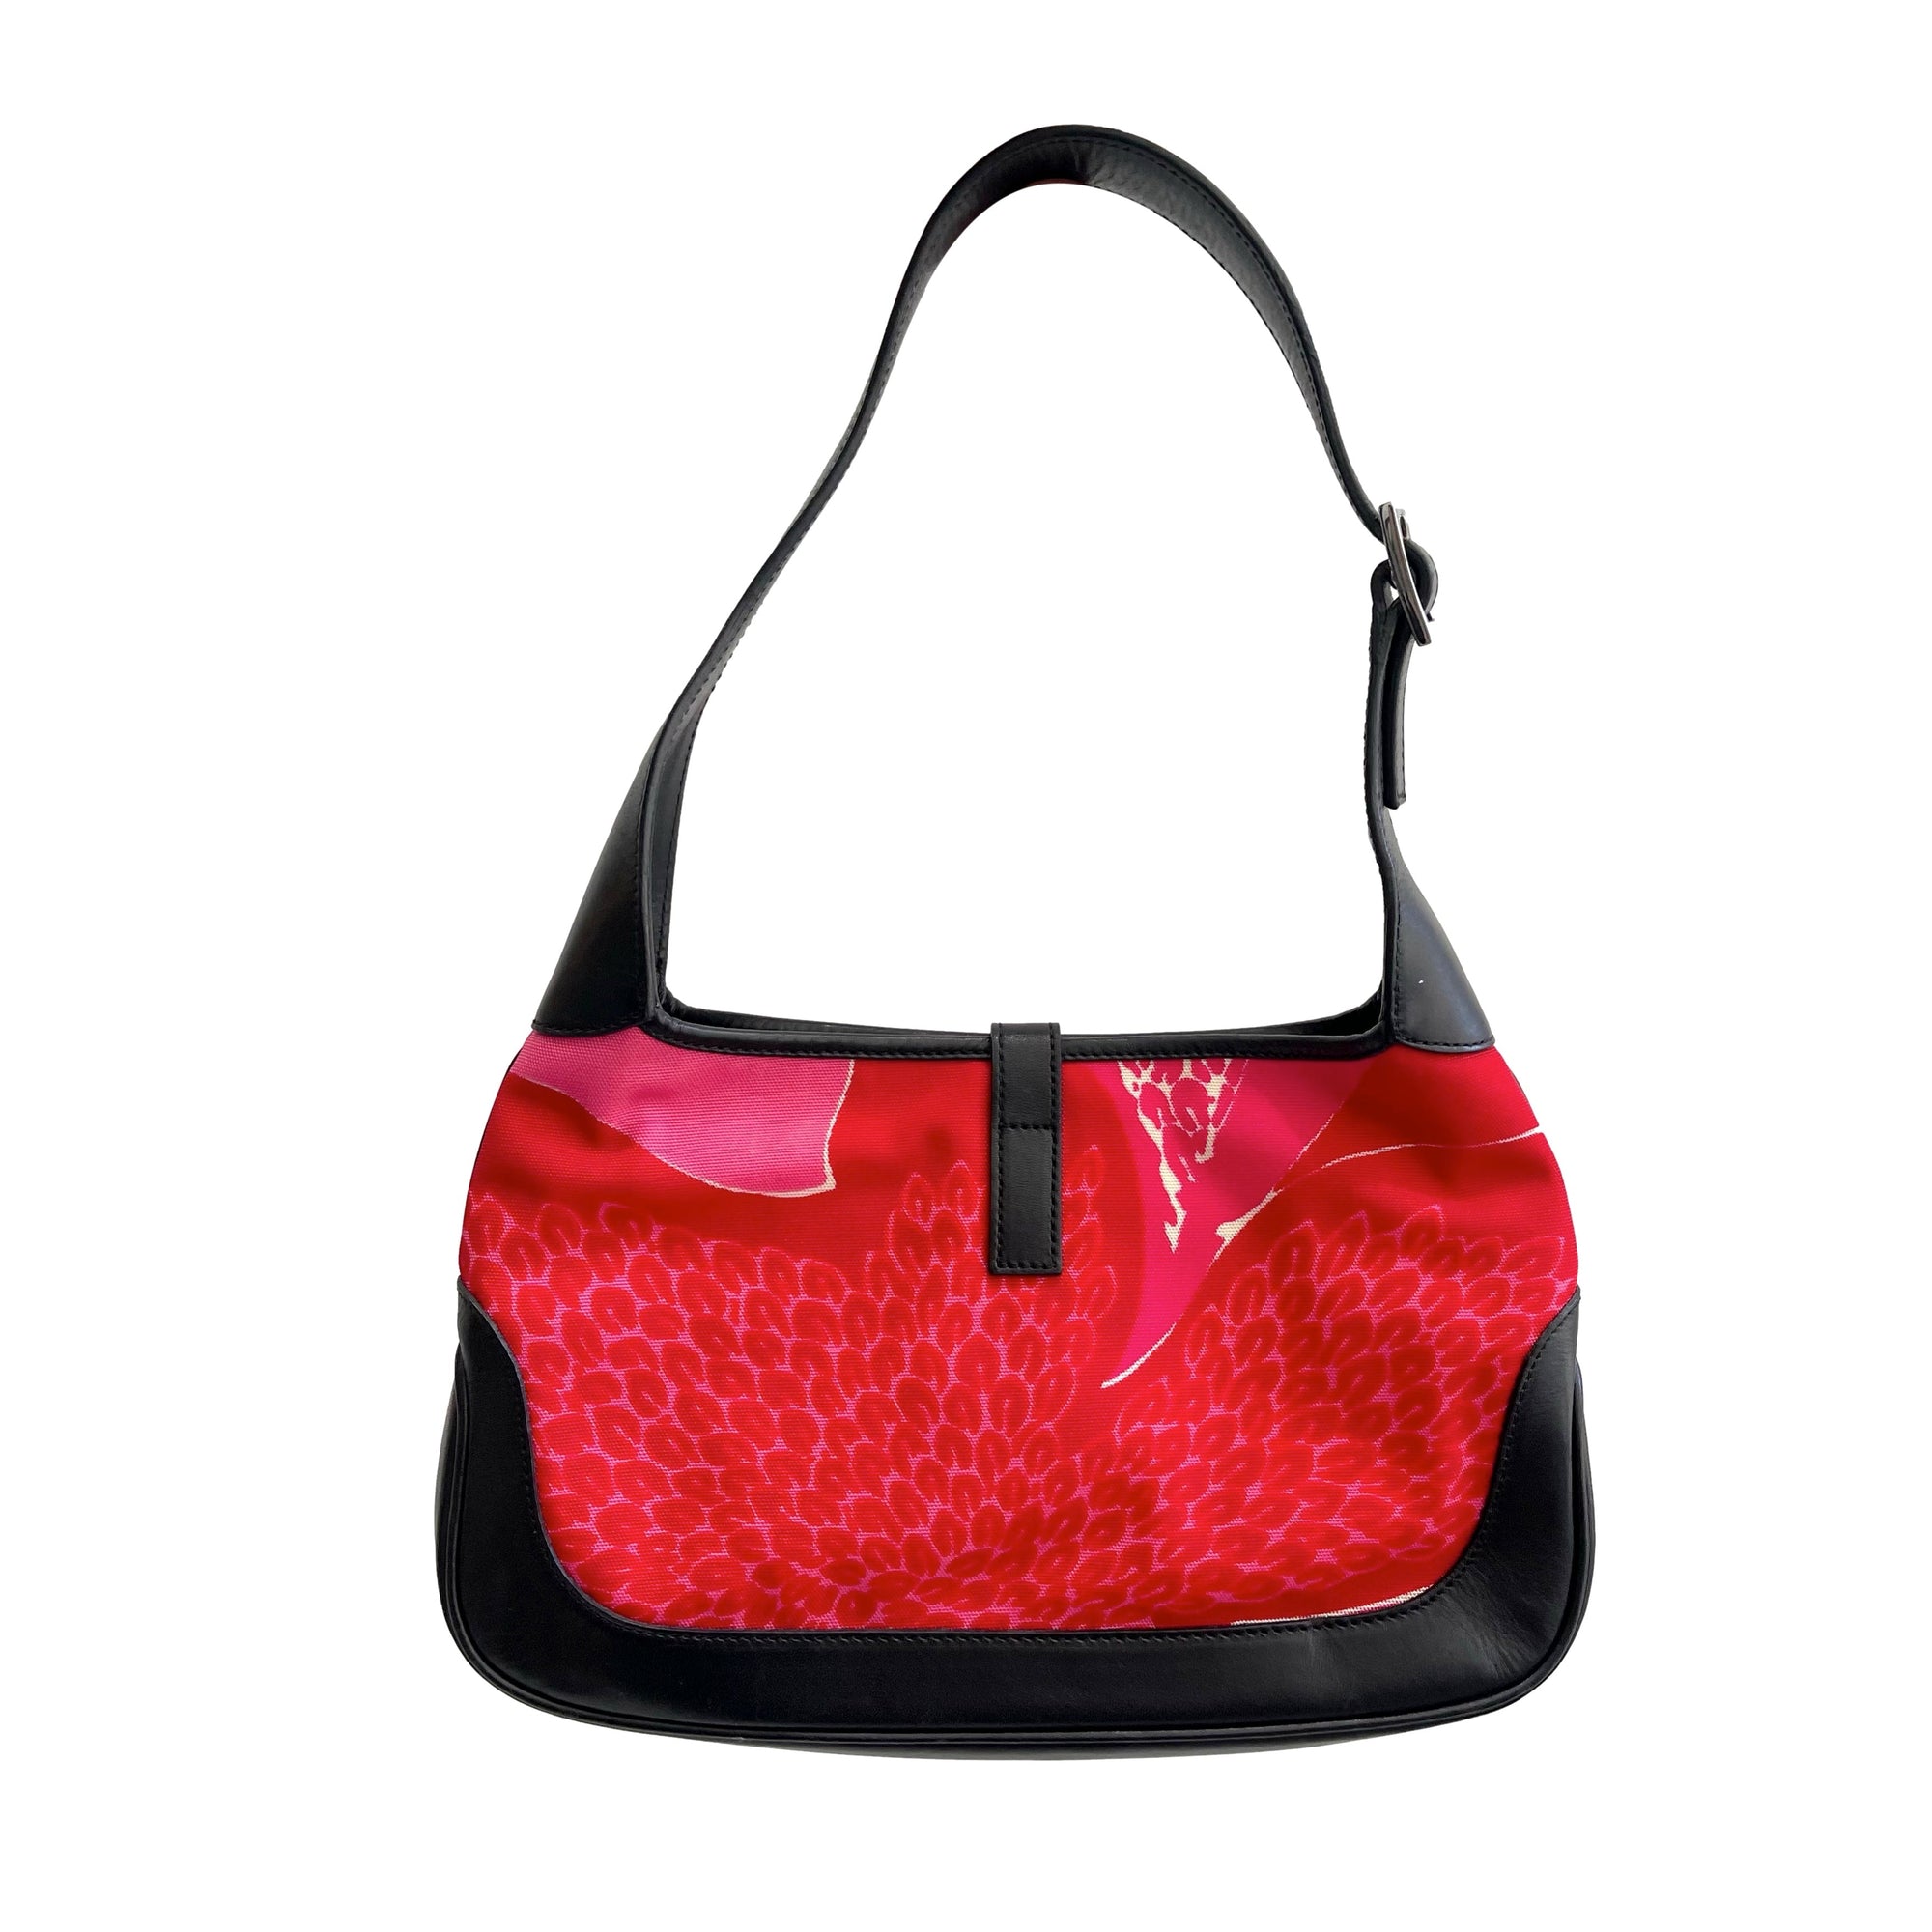 Gucci Pink Floral Jackie Bag - Handbags